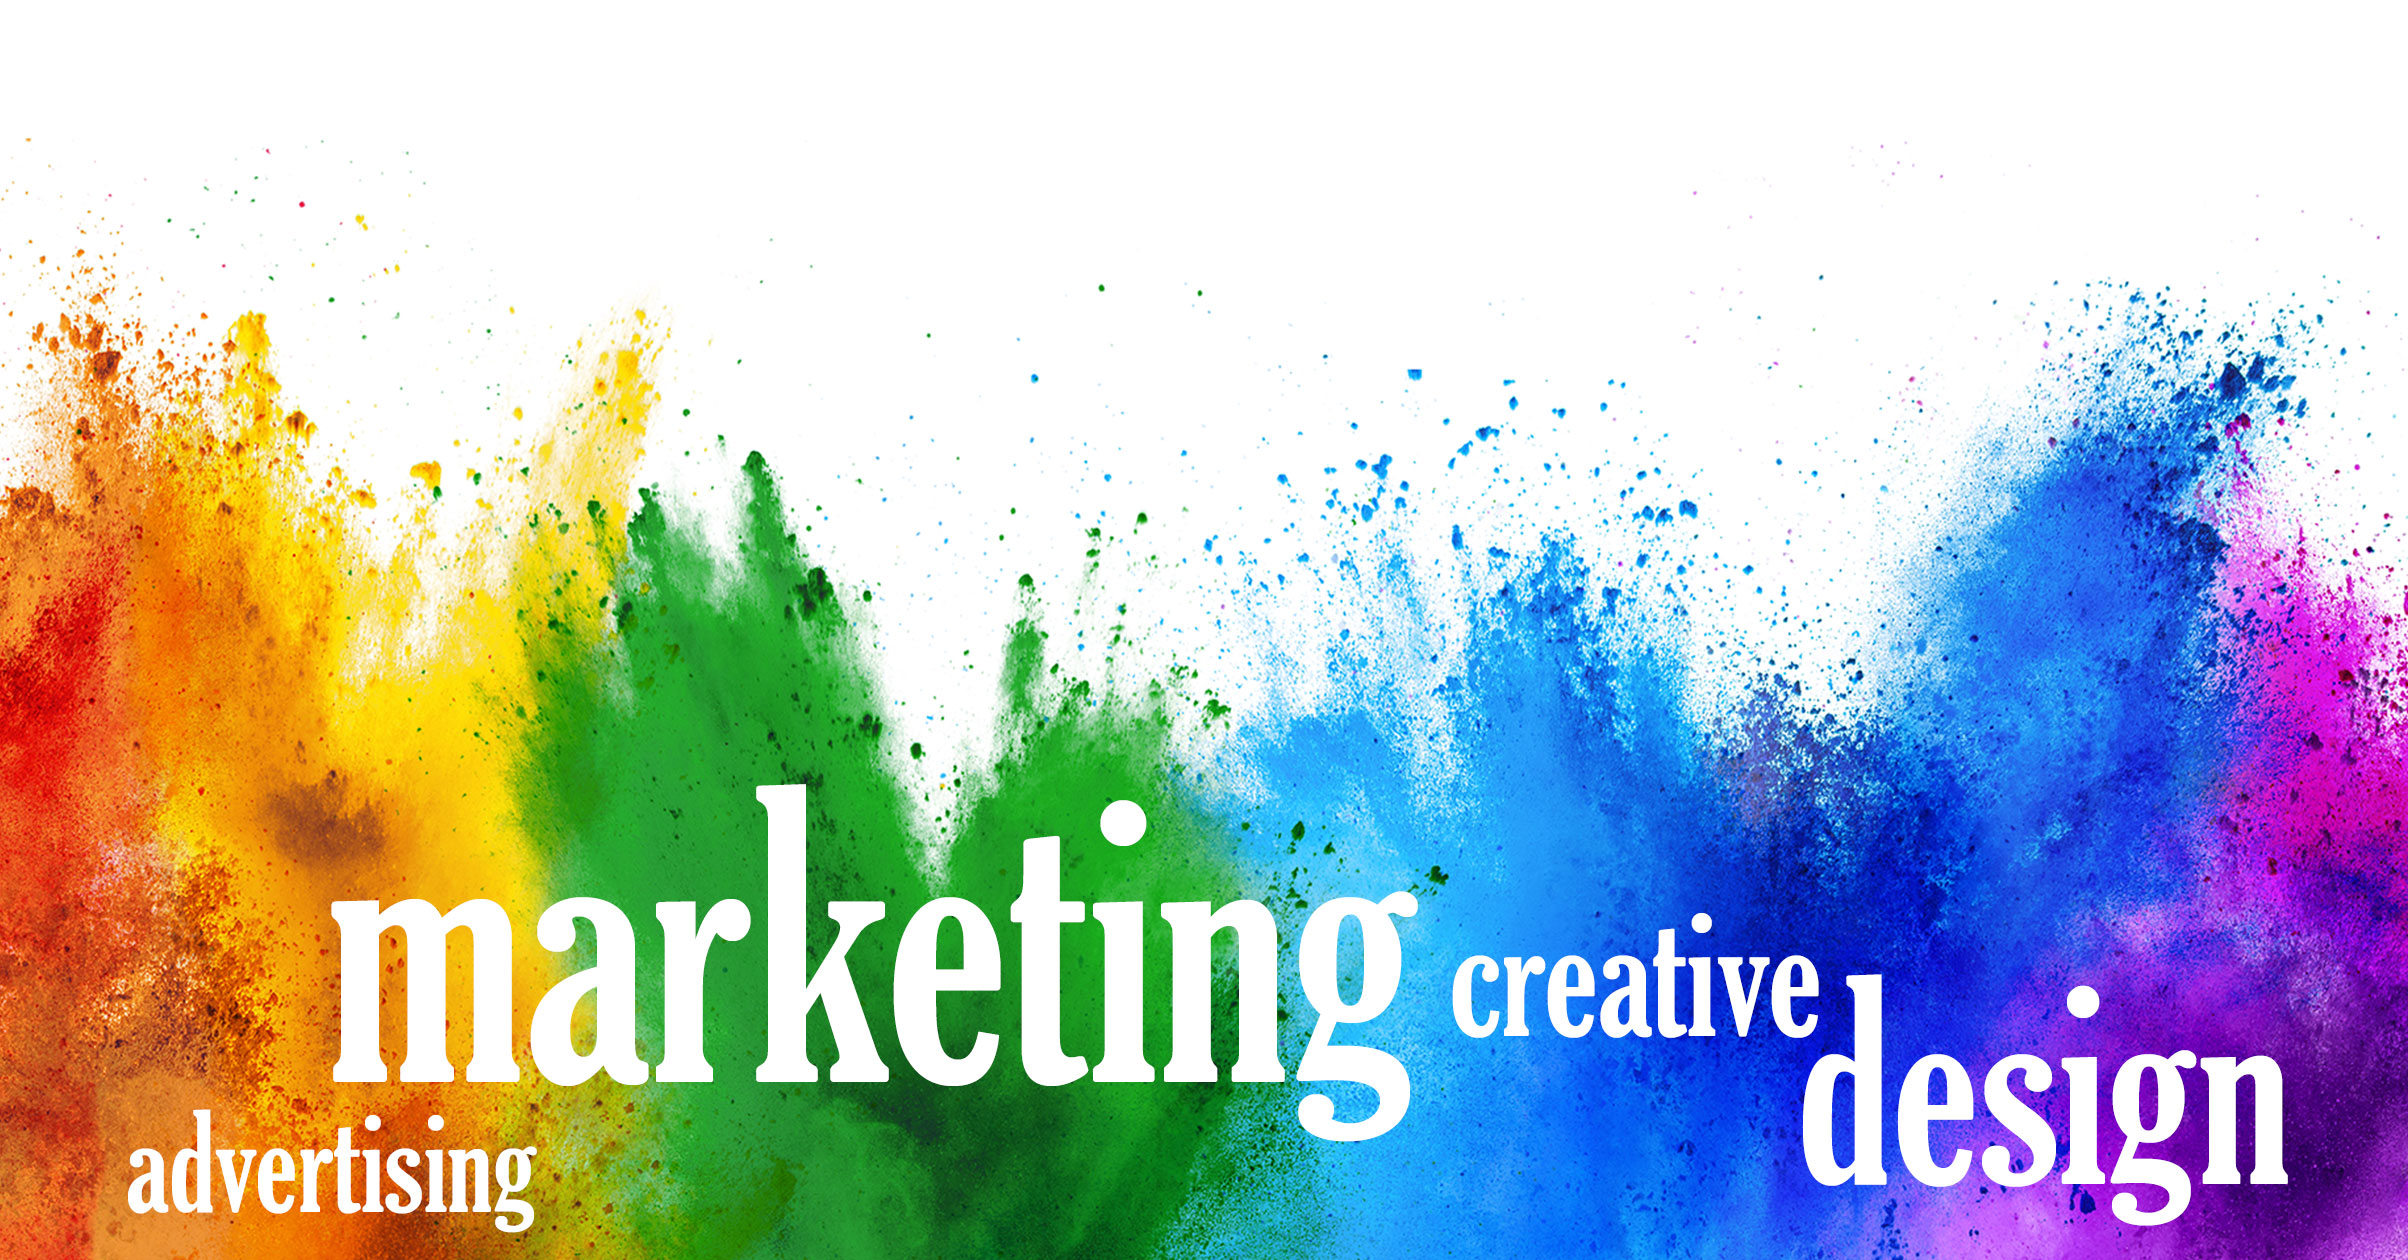 Advertising marketing creative design